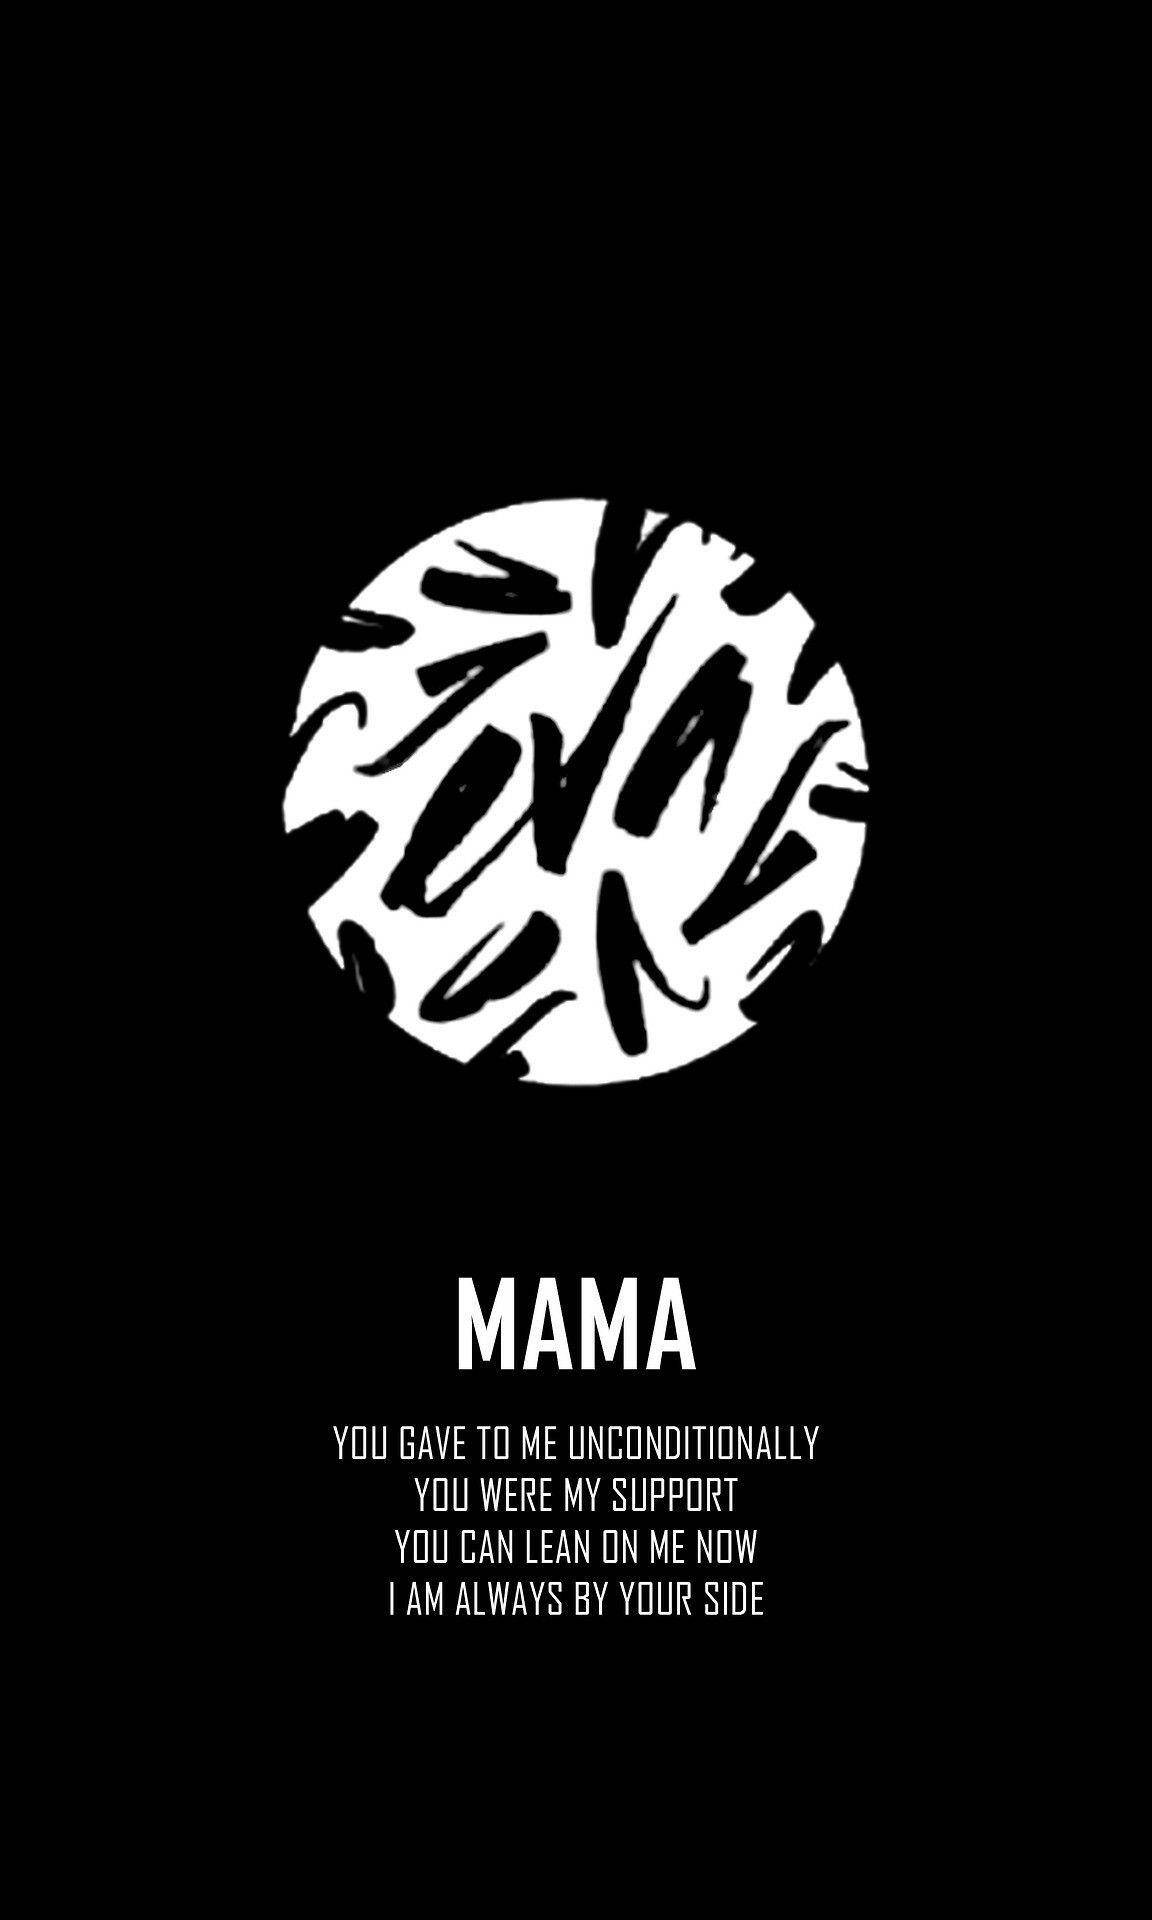 Bts Black Mama Title And Lyrics Background